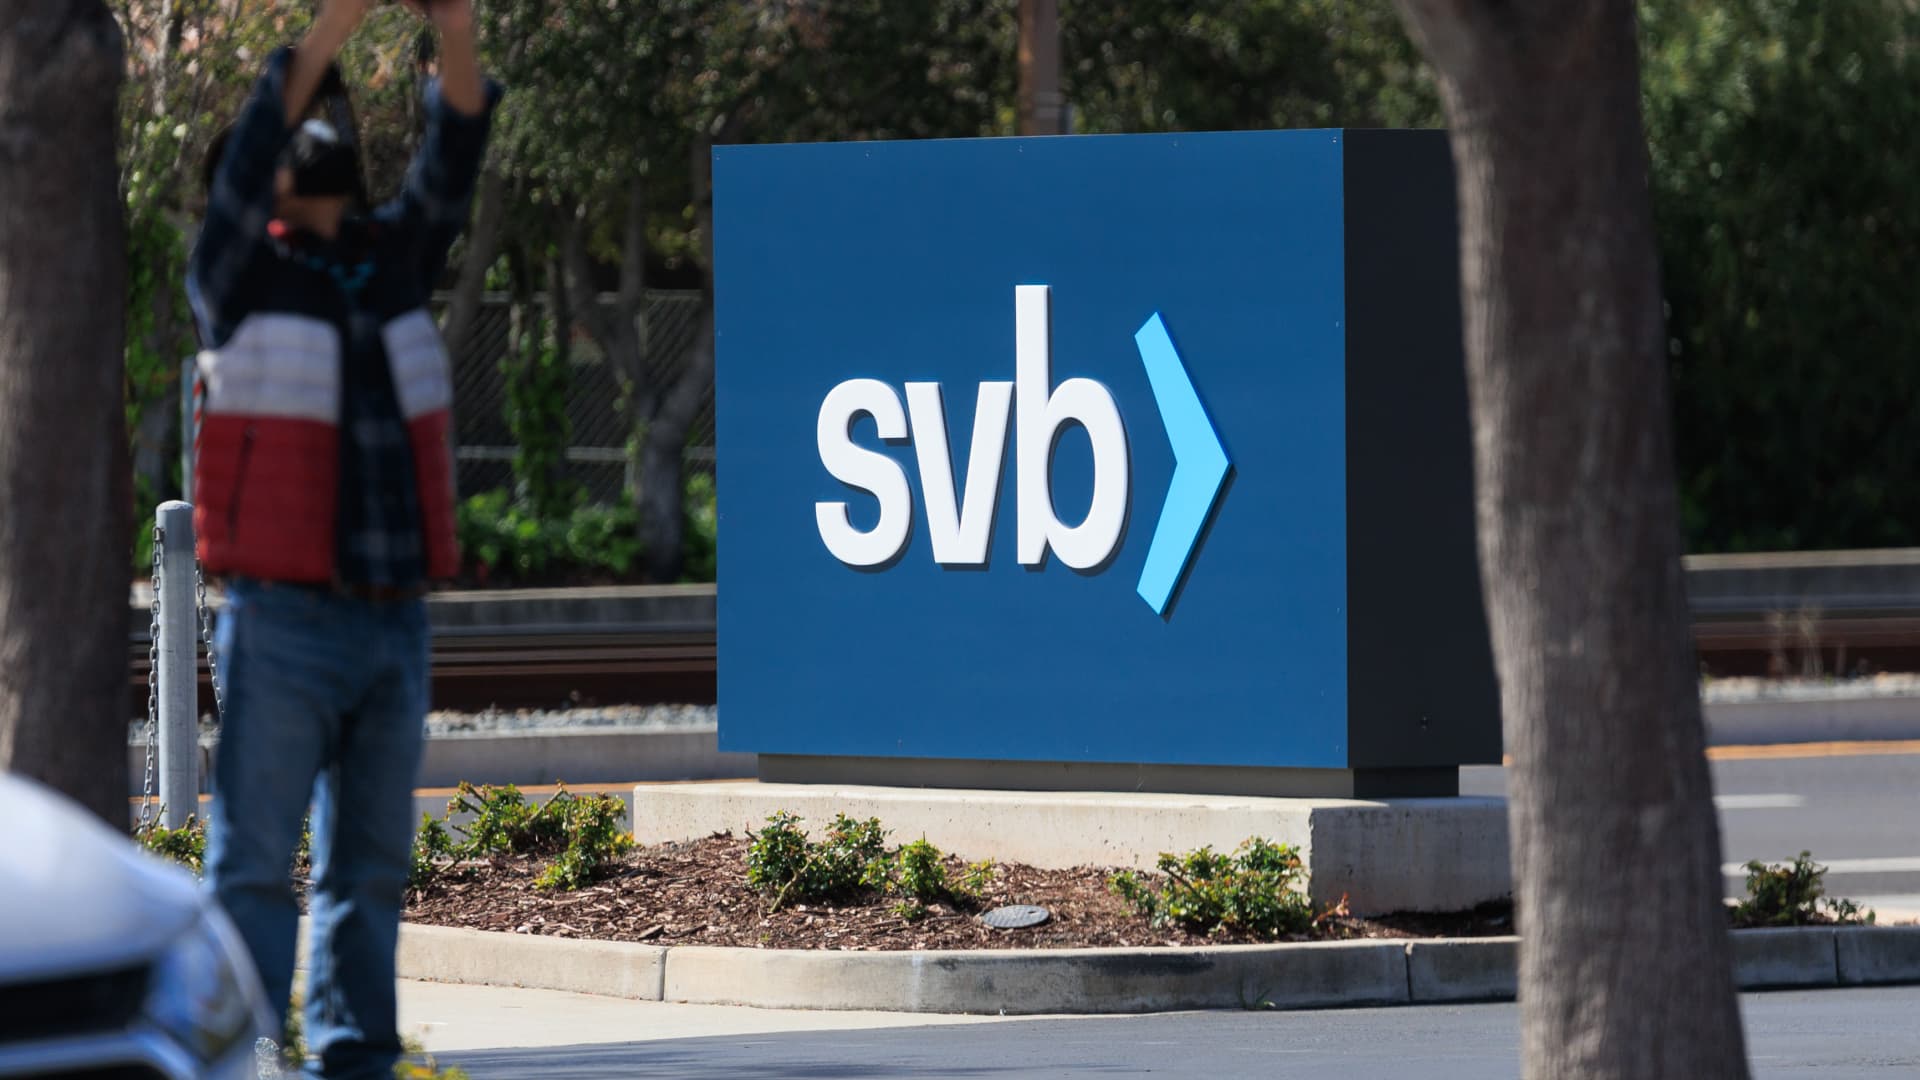 SVB’s new CEO urges shoppers to ‘assist us rebuild our deposit base’